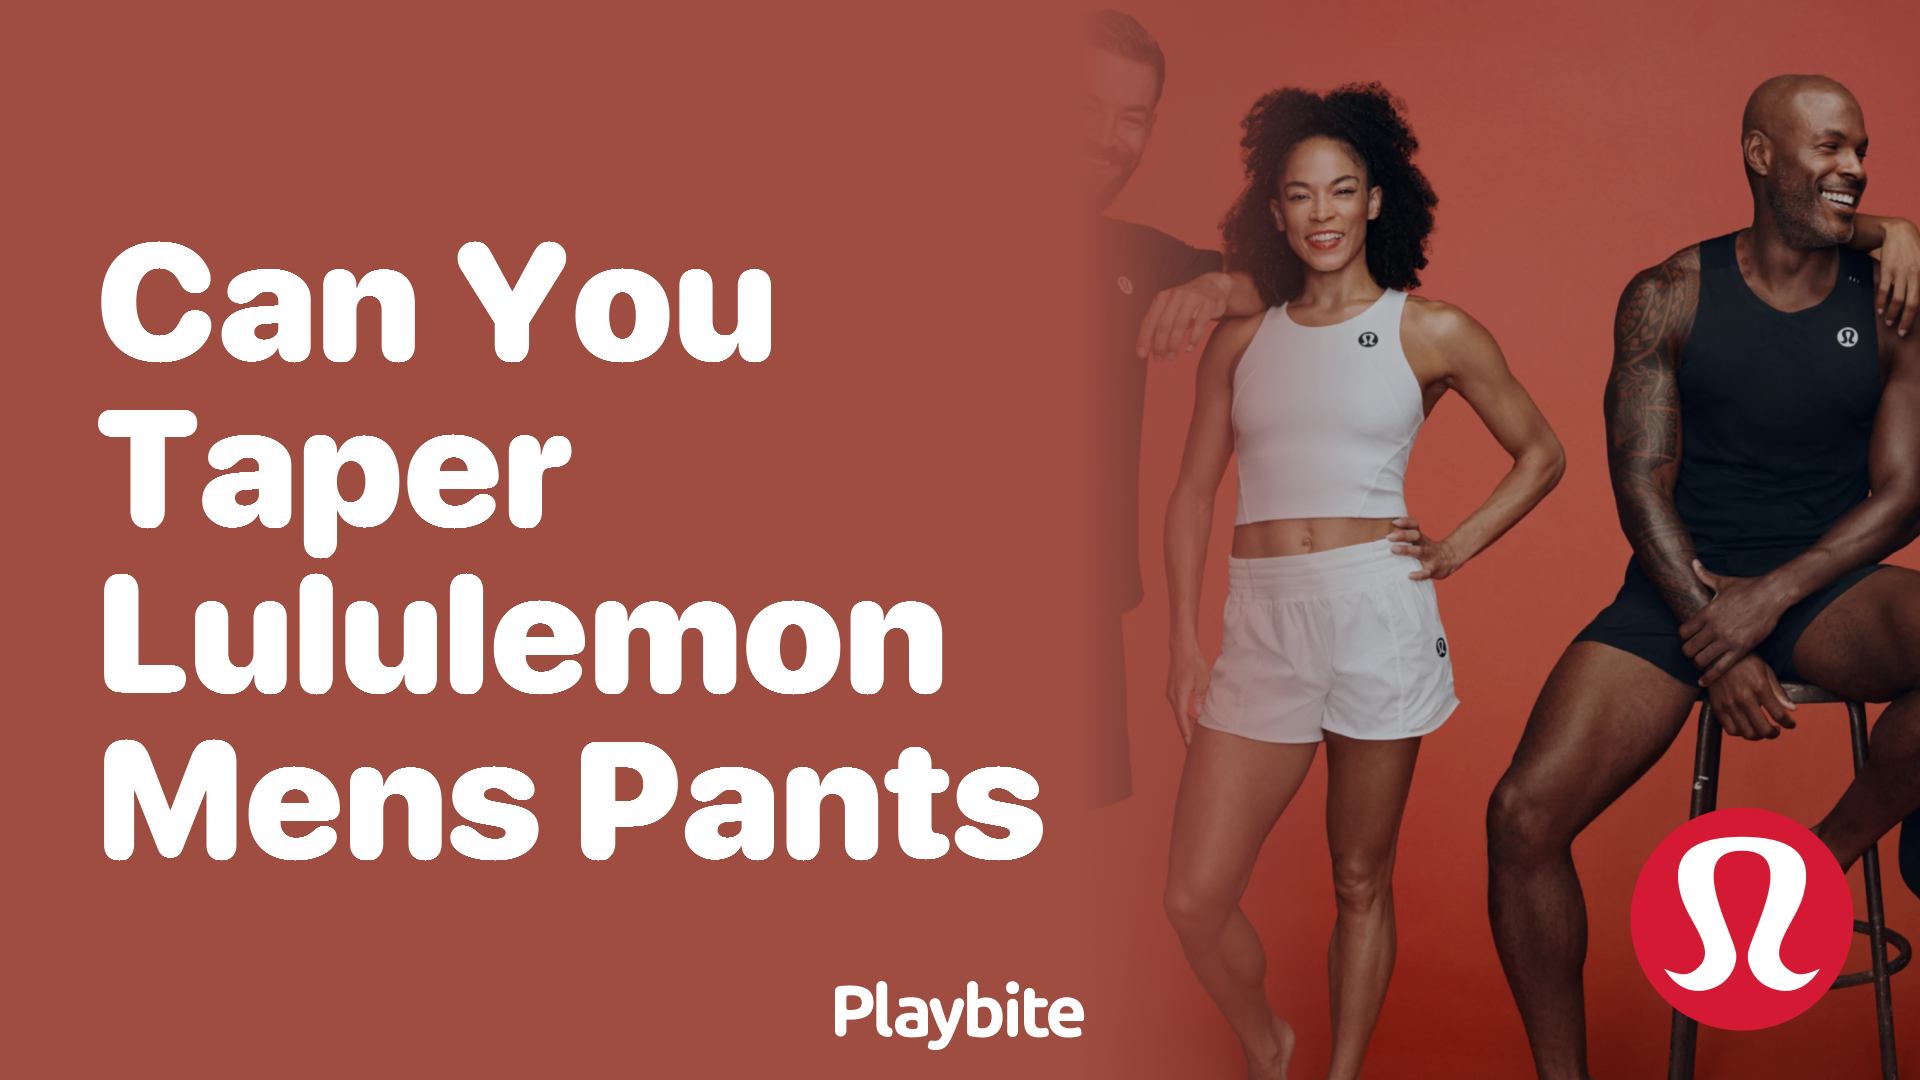 Can You Taper Lululemon Men's Pants? - Playbite